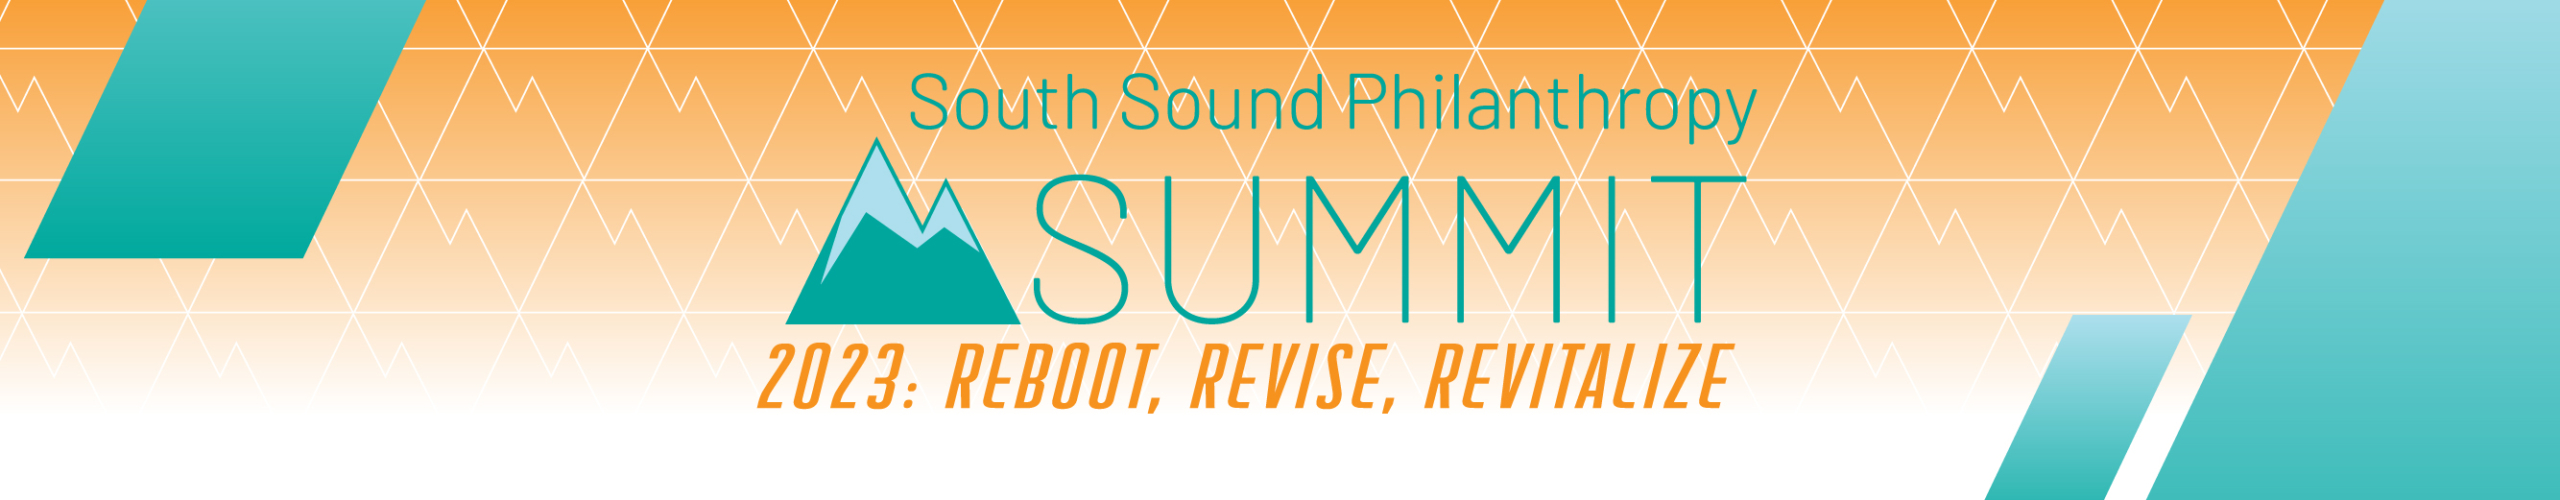 SSP Summit 2023: Reboot, Revise, Revitalize